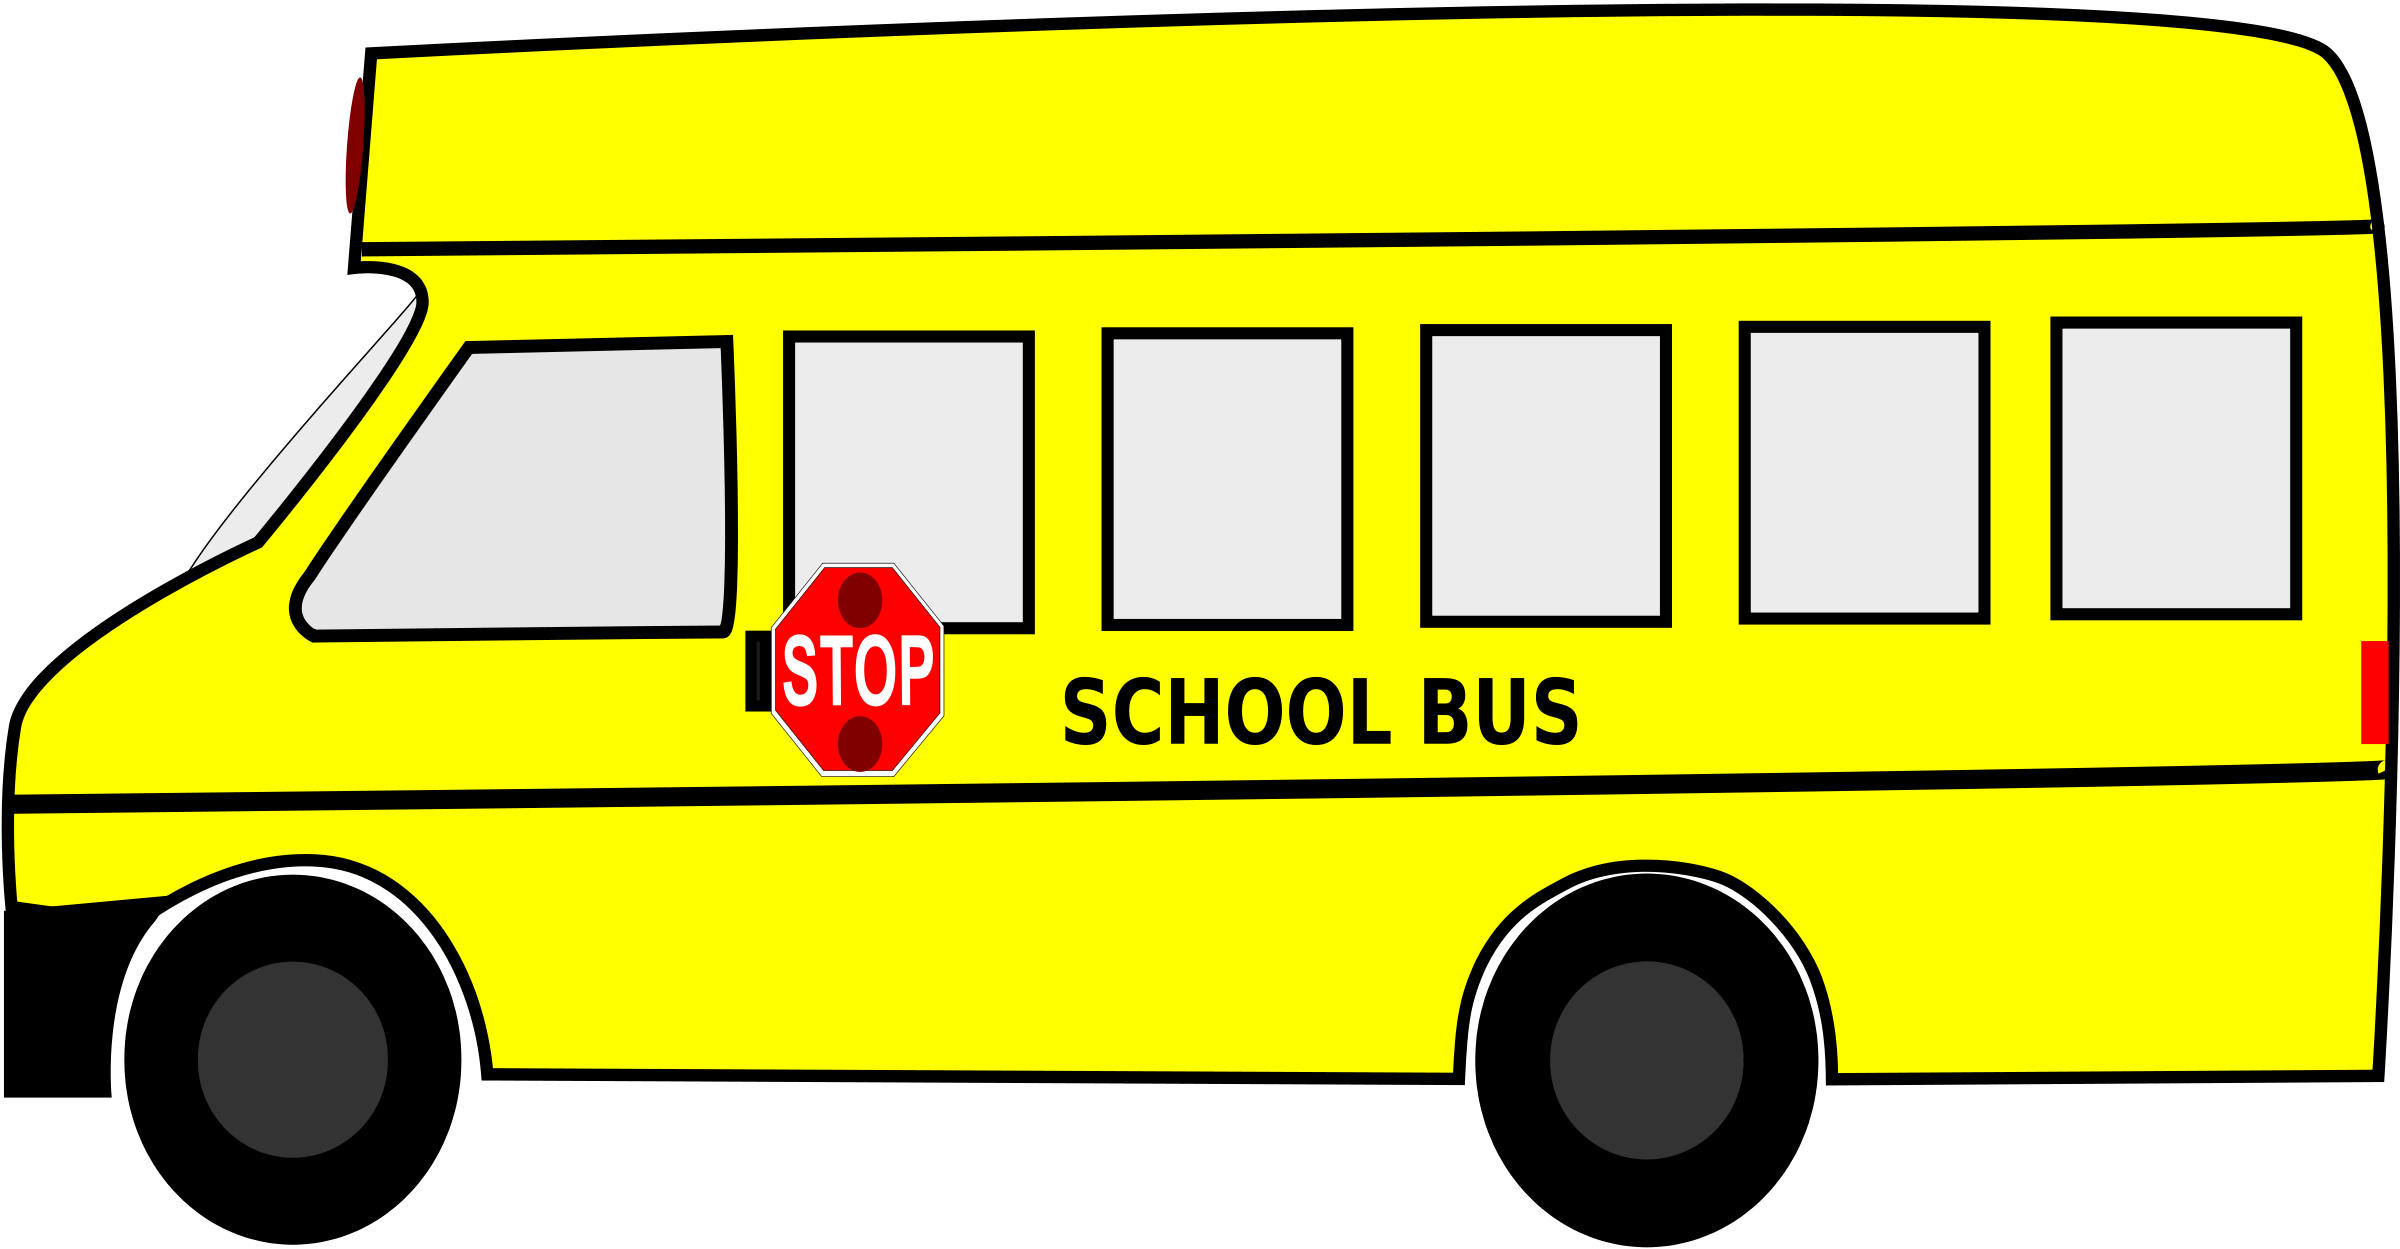 School Bus Clip Art Black And White | Clipart Panda - Free Clipart ...